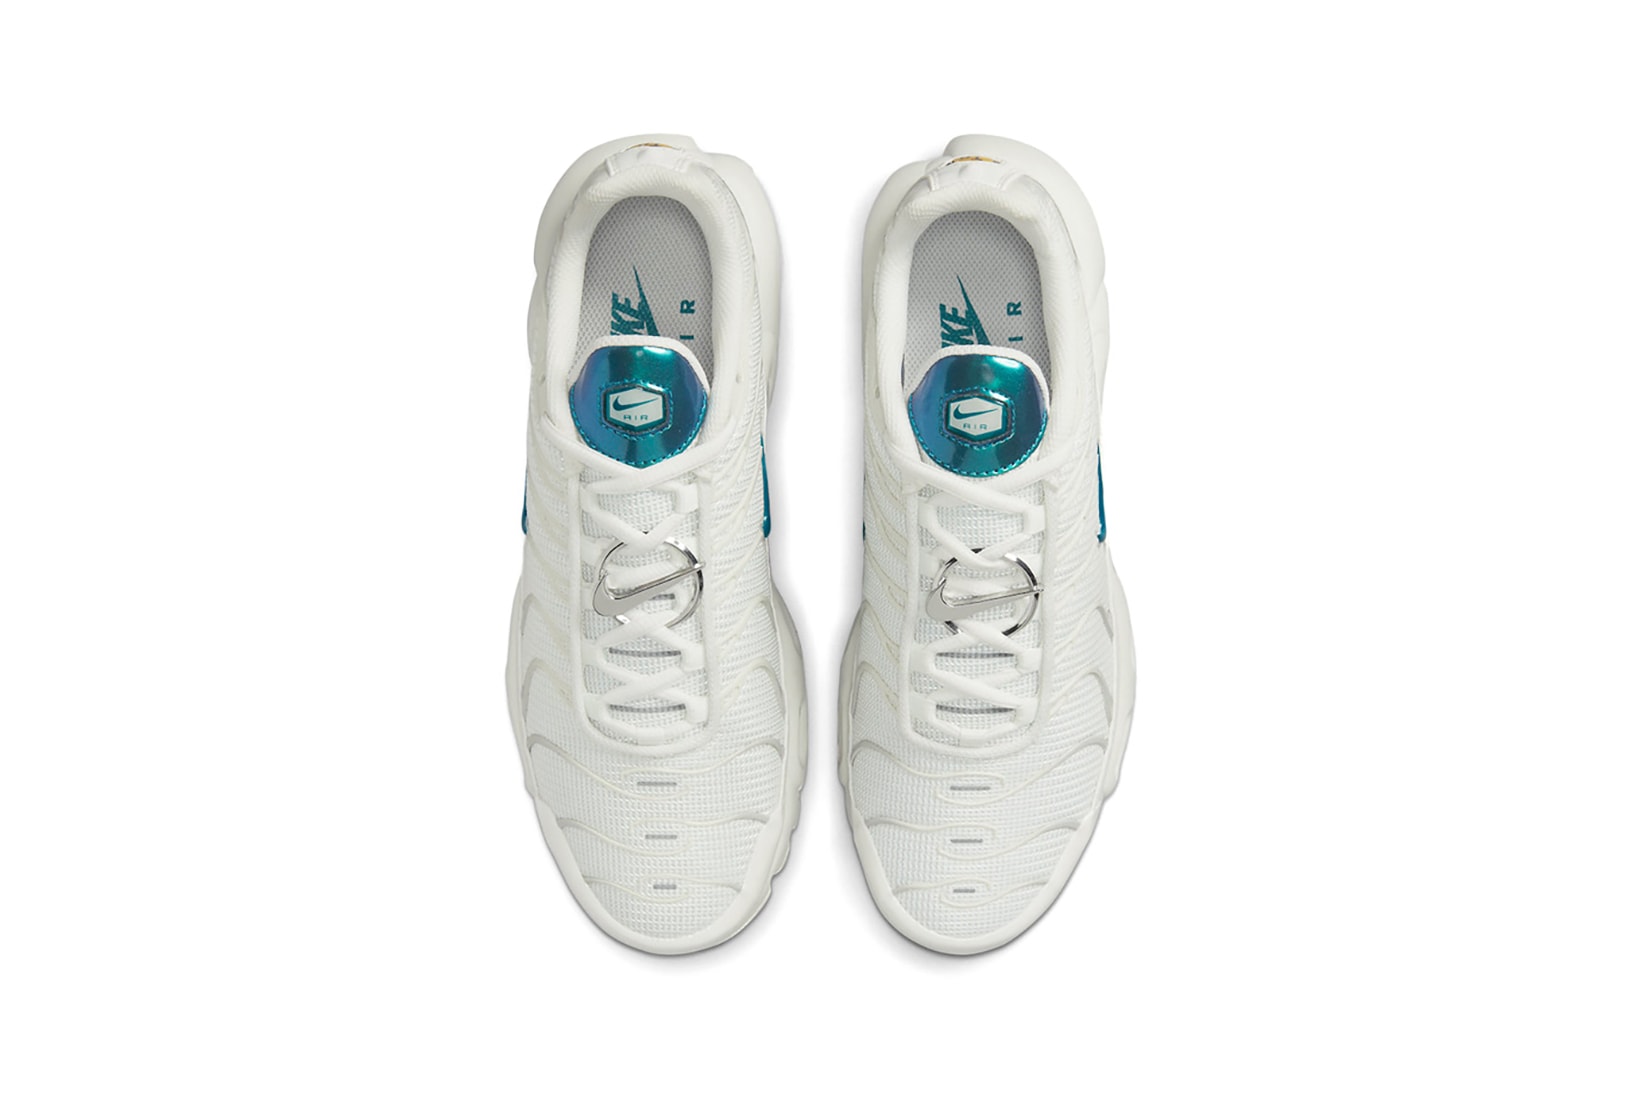 Nike Womens Air Max Plus Metallic Teal Sneakers Footwear Kicks Shoes White Blue Insole Top View